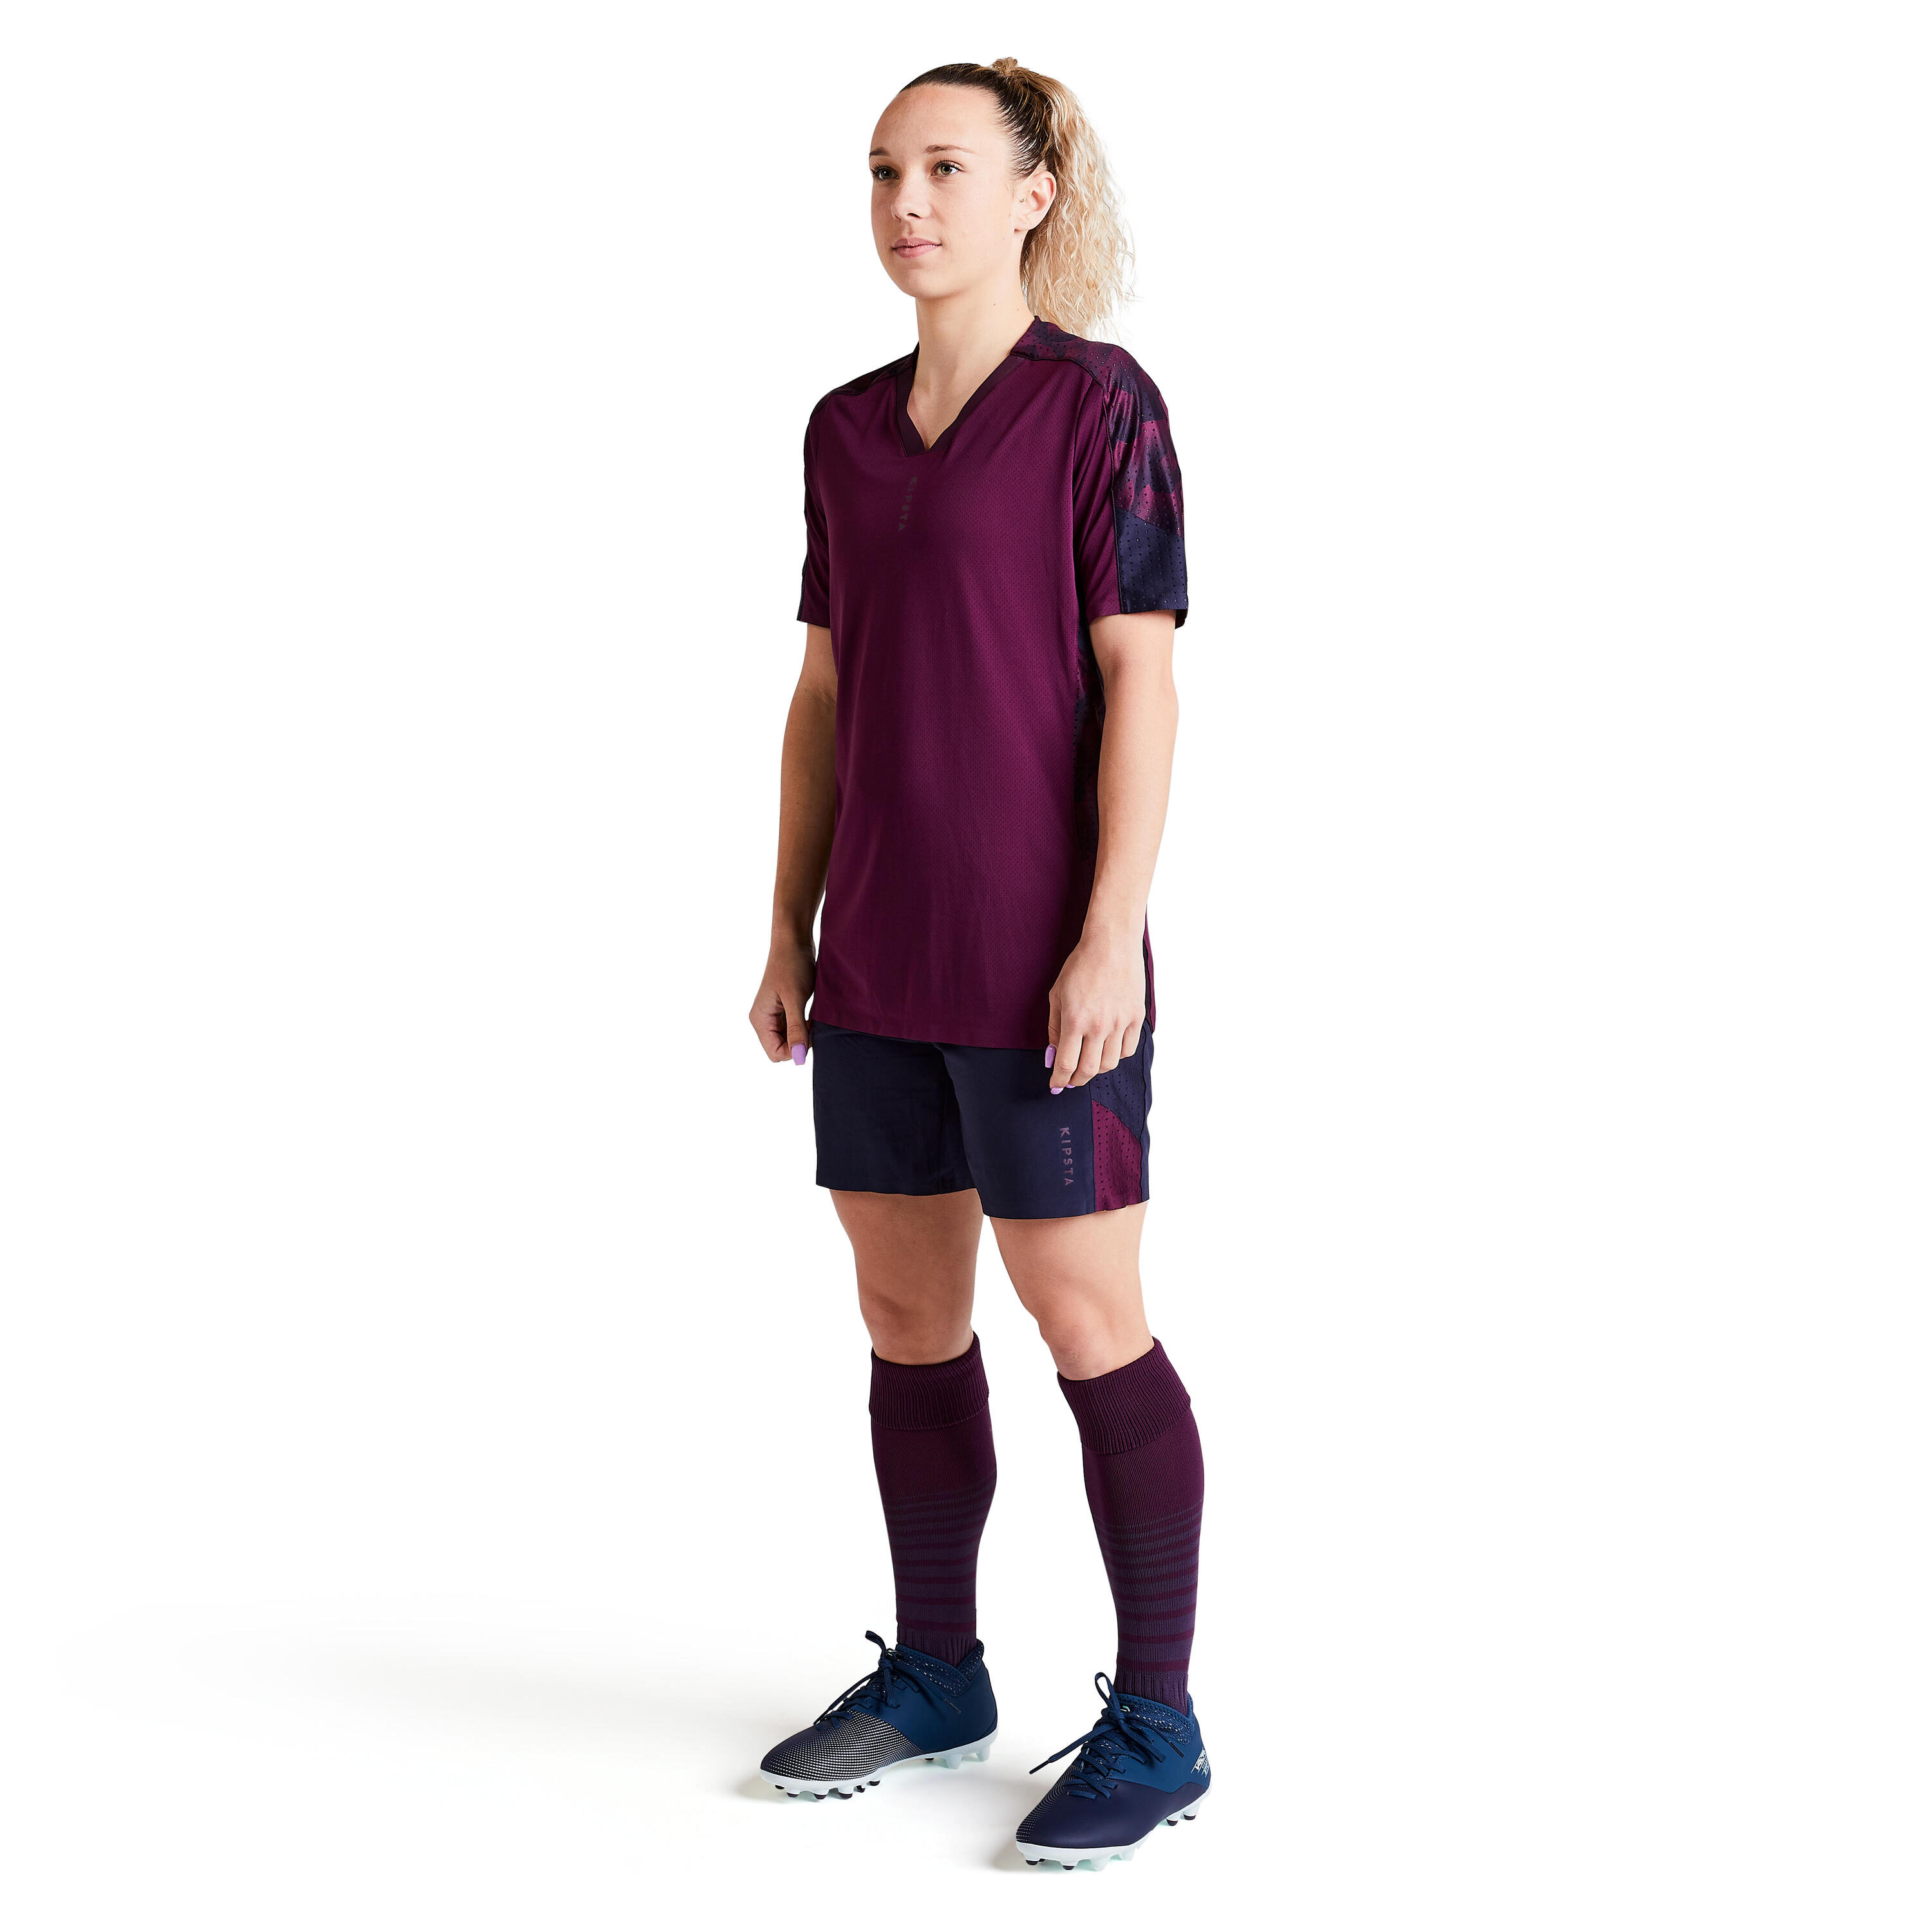 Women's Football Shorts F900 - Blue/Black 4/25